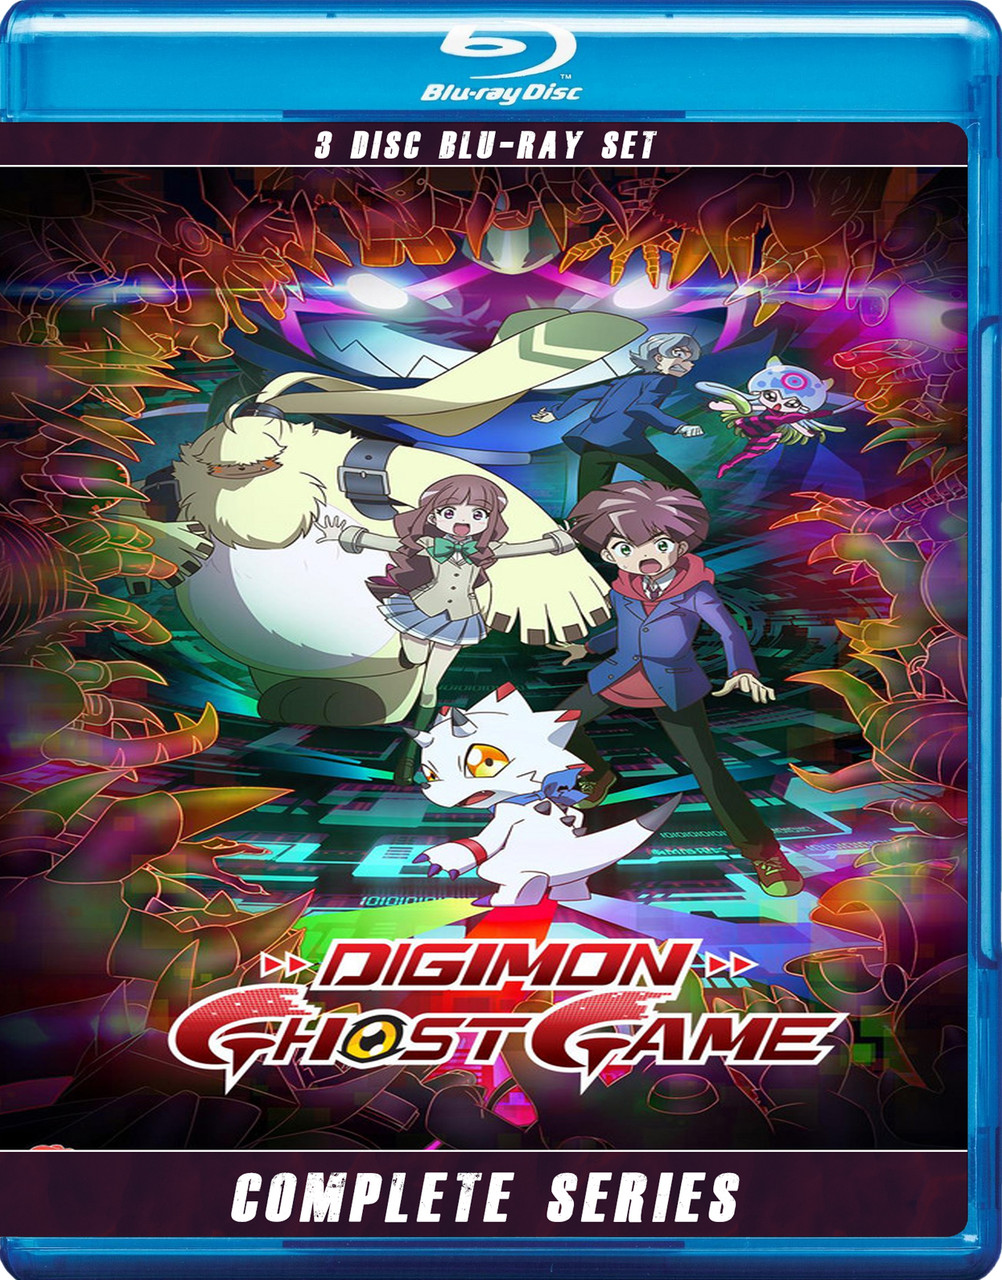 Digimon Ghost Game getting an English dub